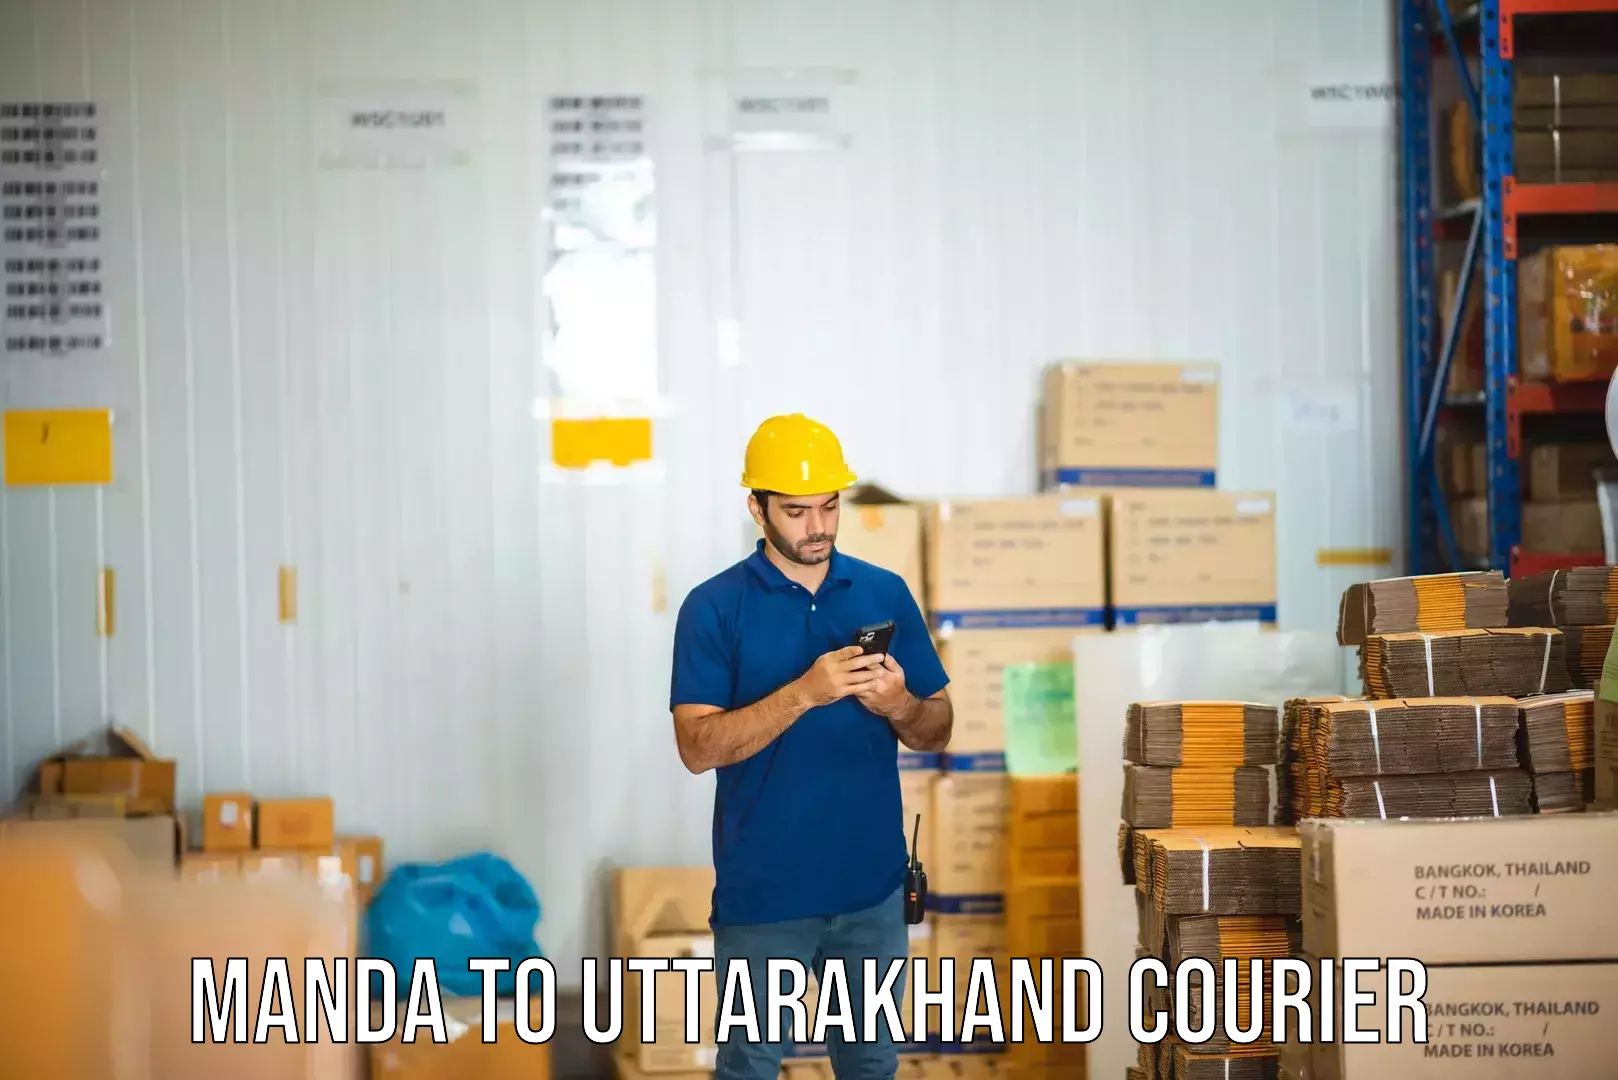 Express delivery capabilities Manda to Uttarakhand